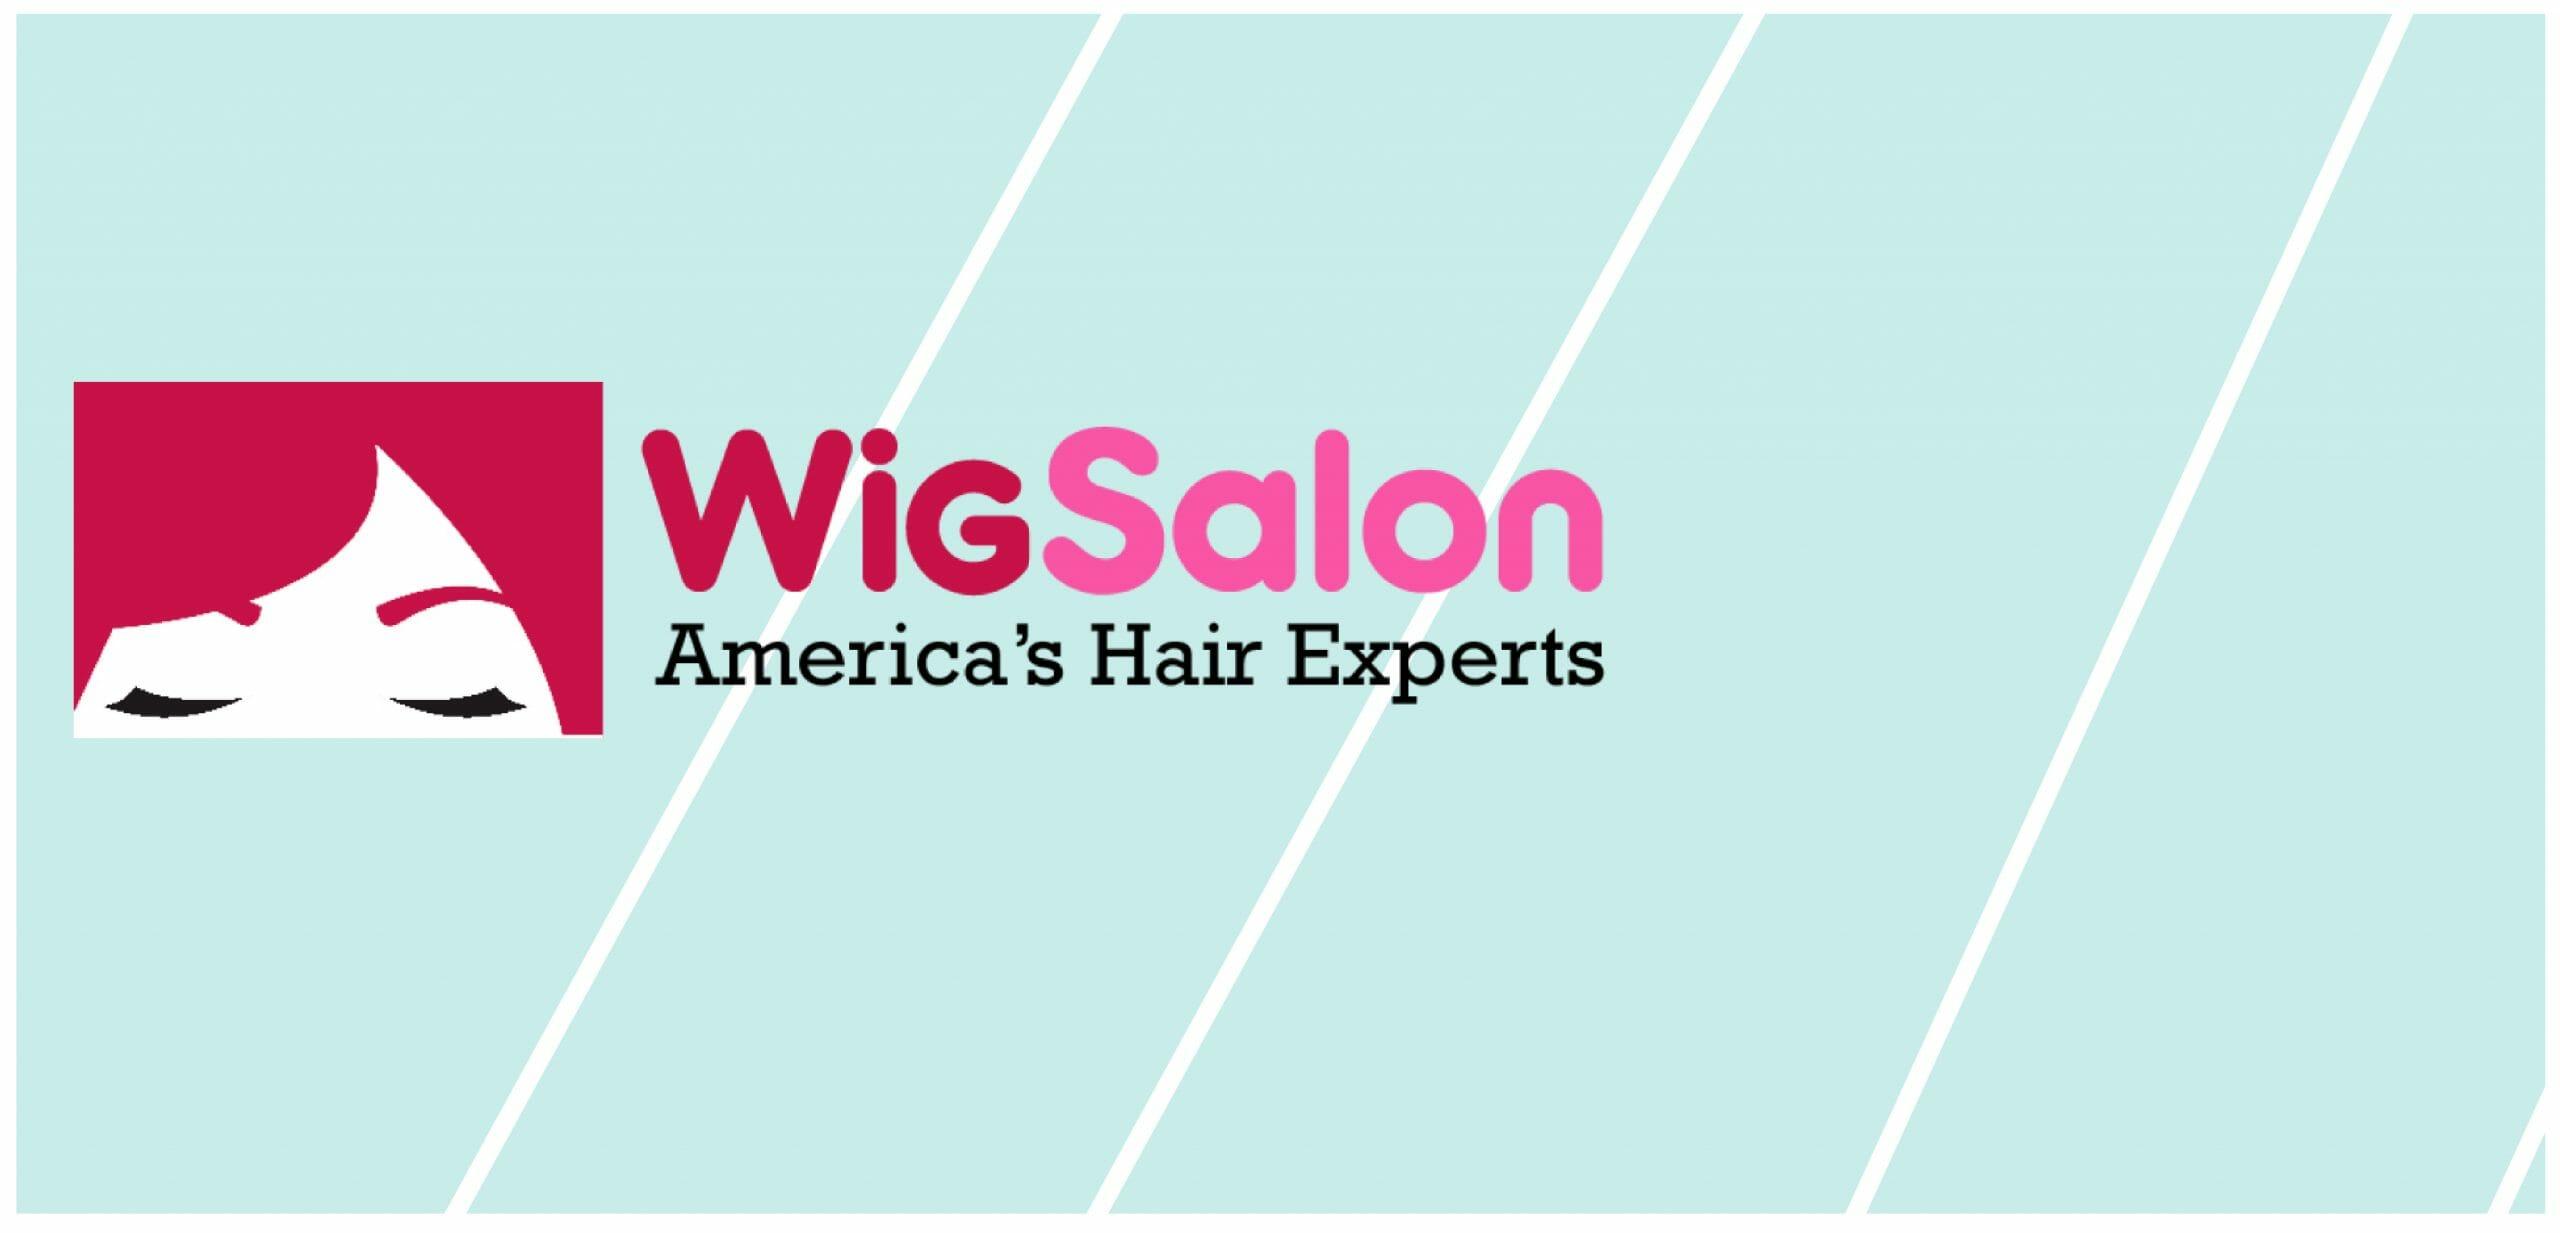 Image of WigSalon logo used in Magento upgrade.